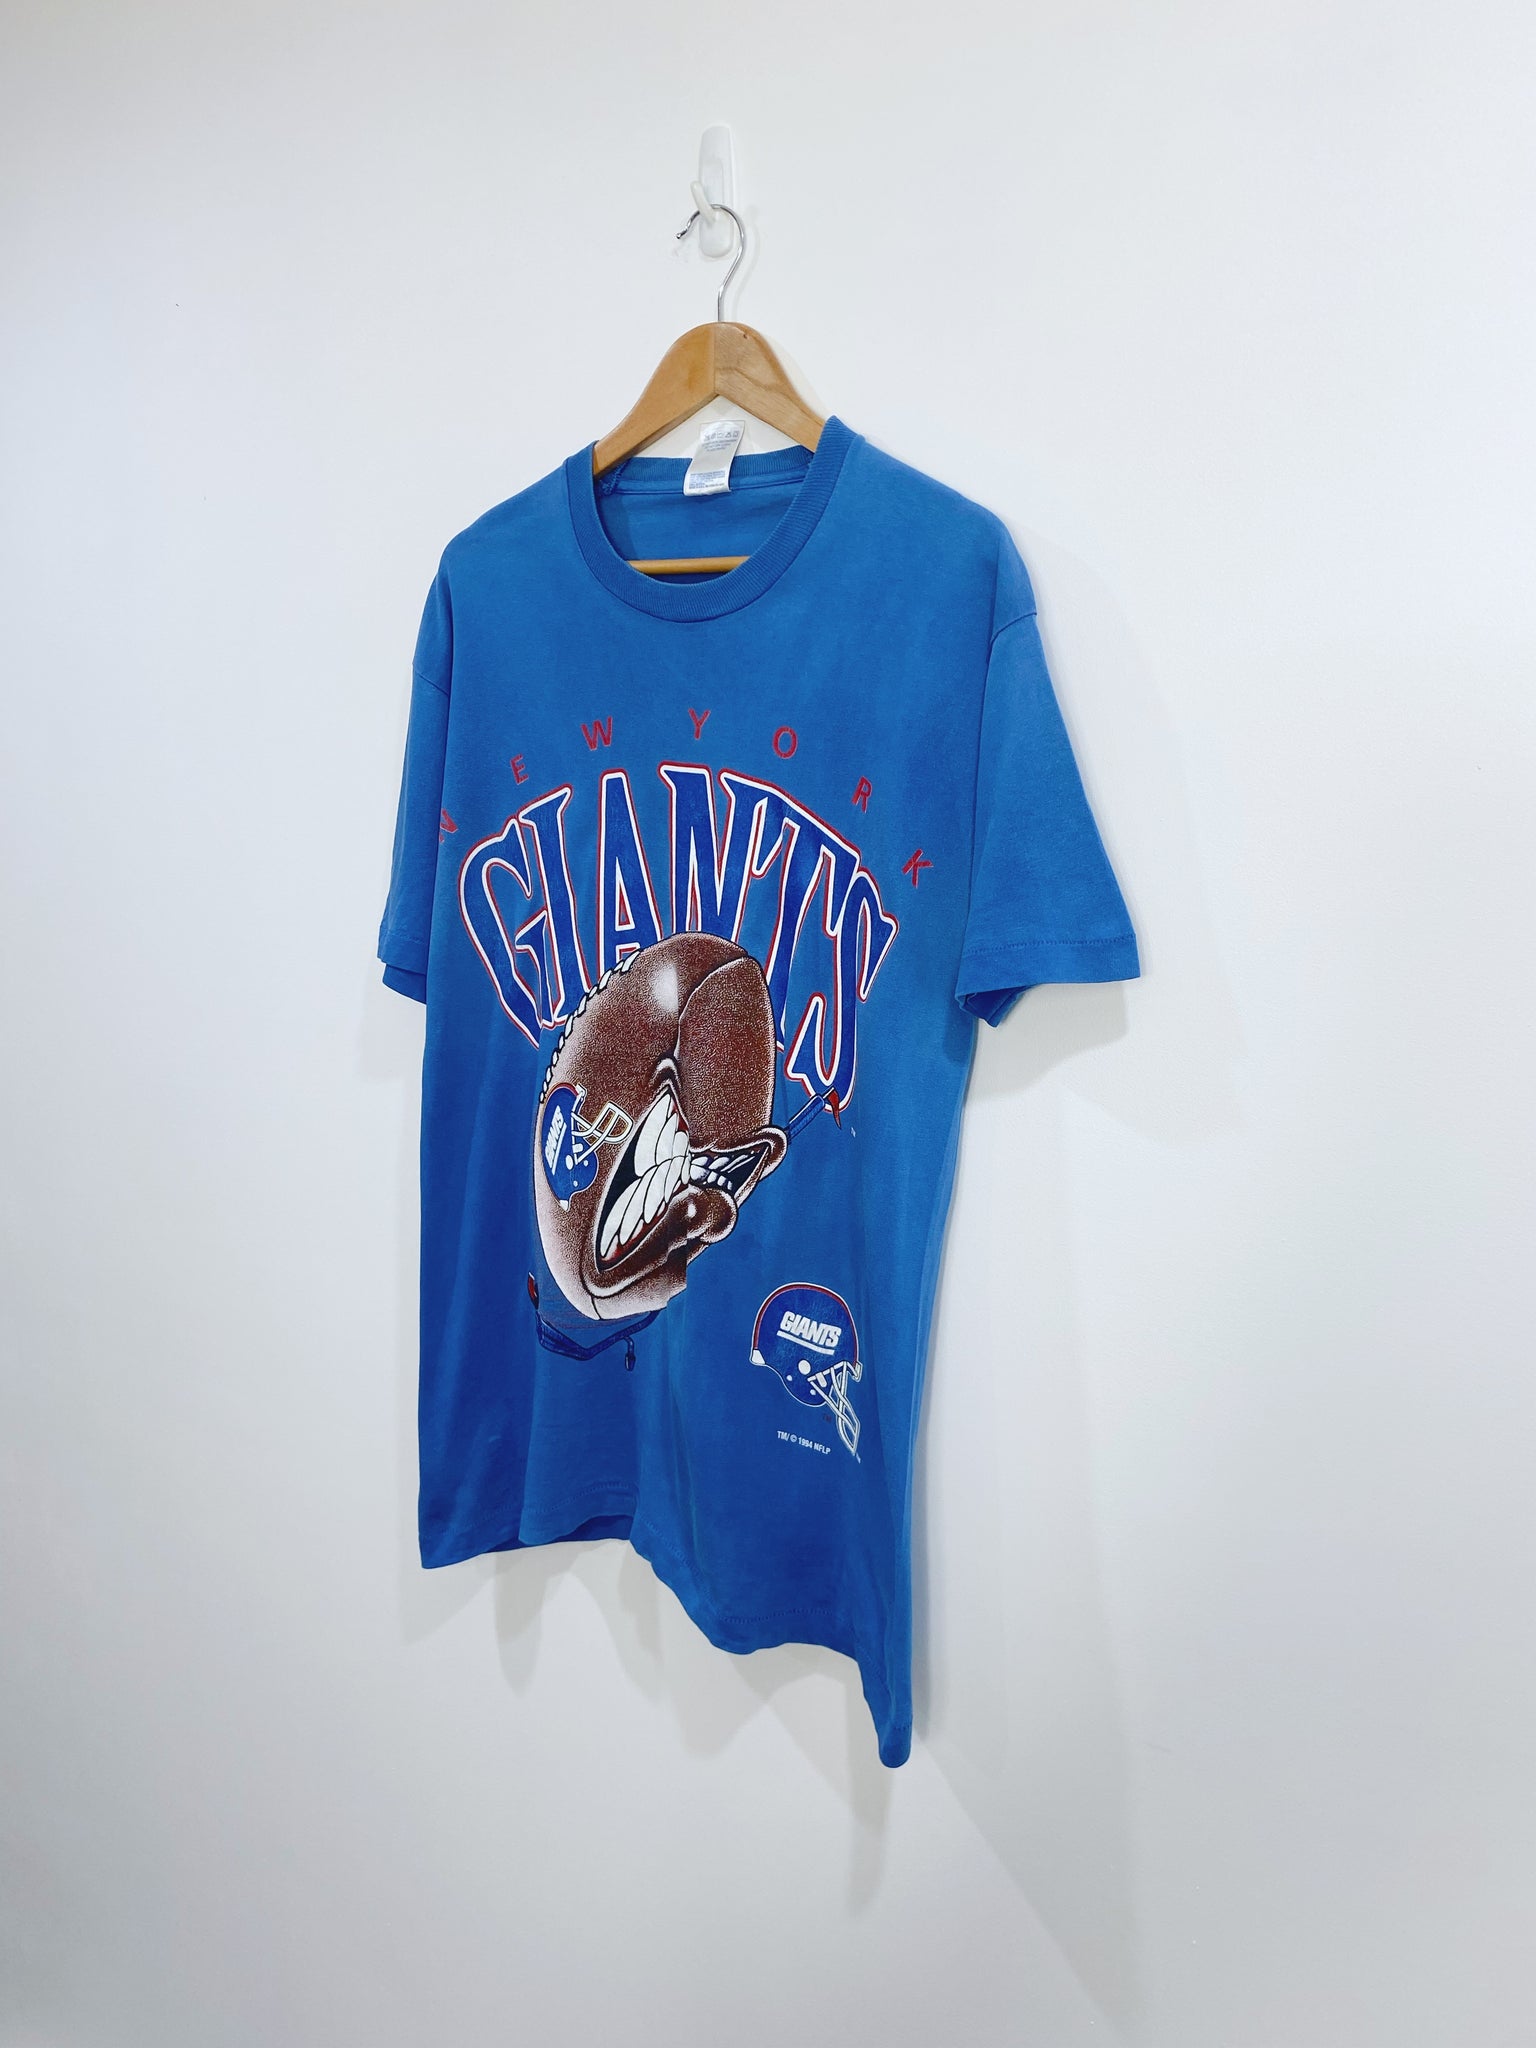 Vintage 1994 New York Giants T-shirt L